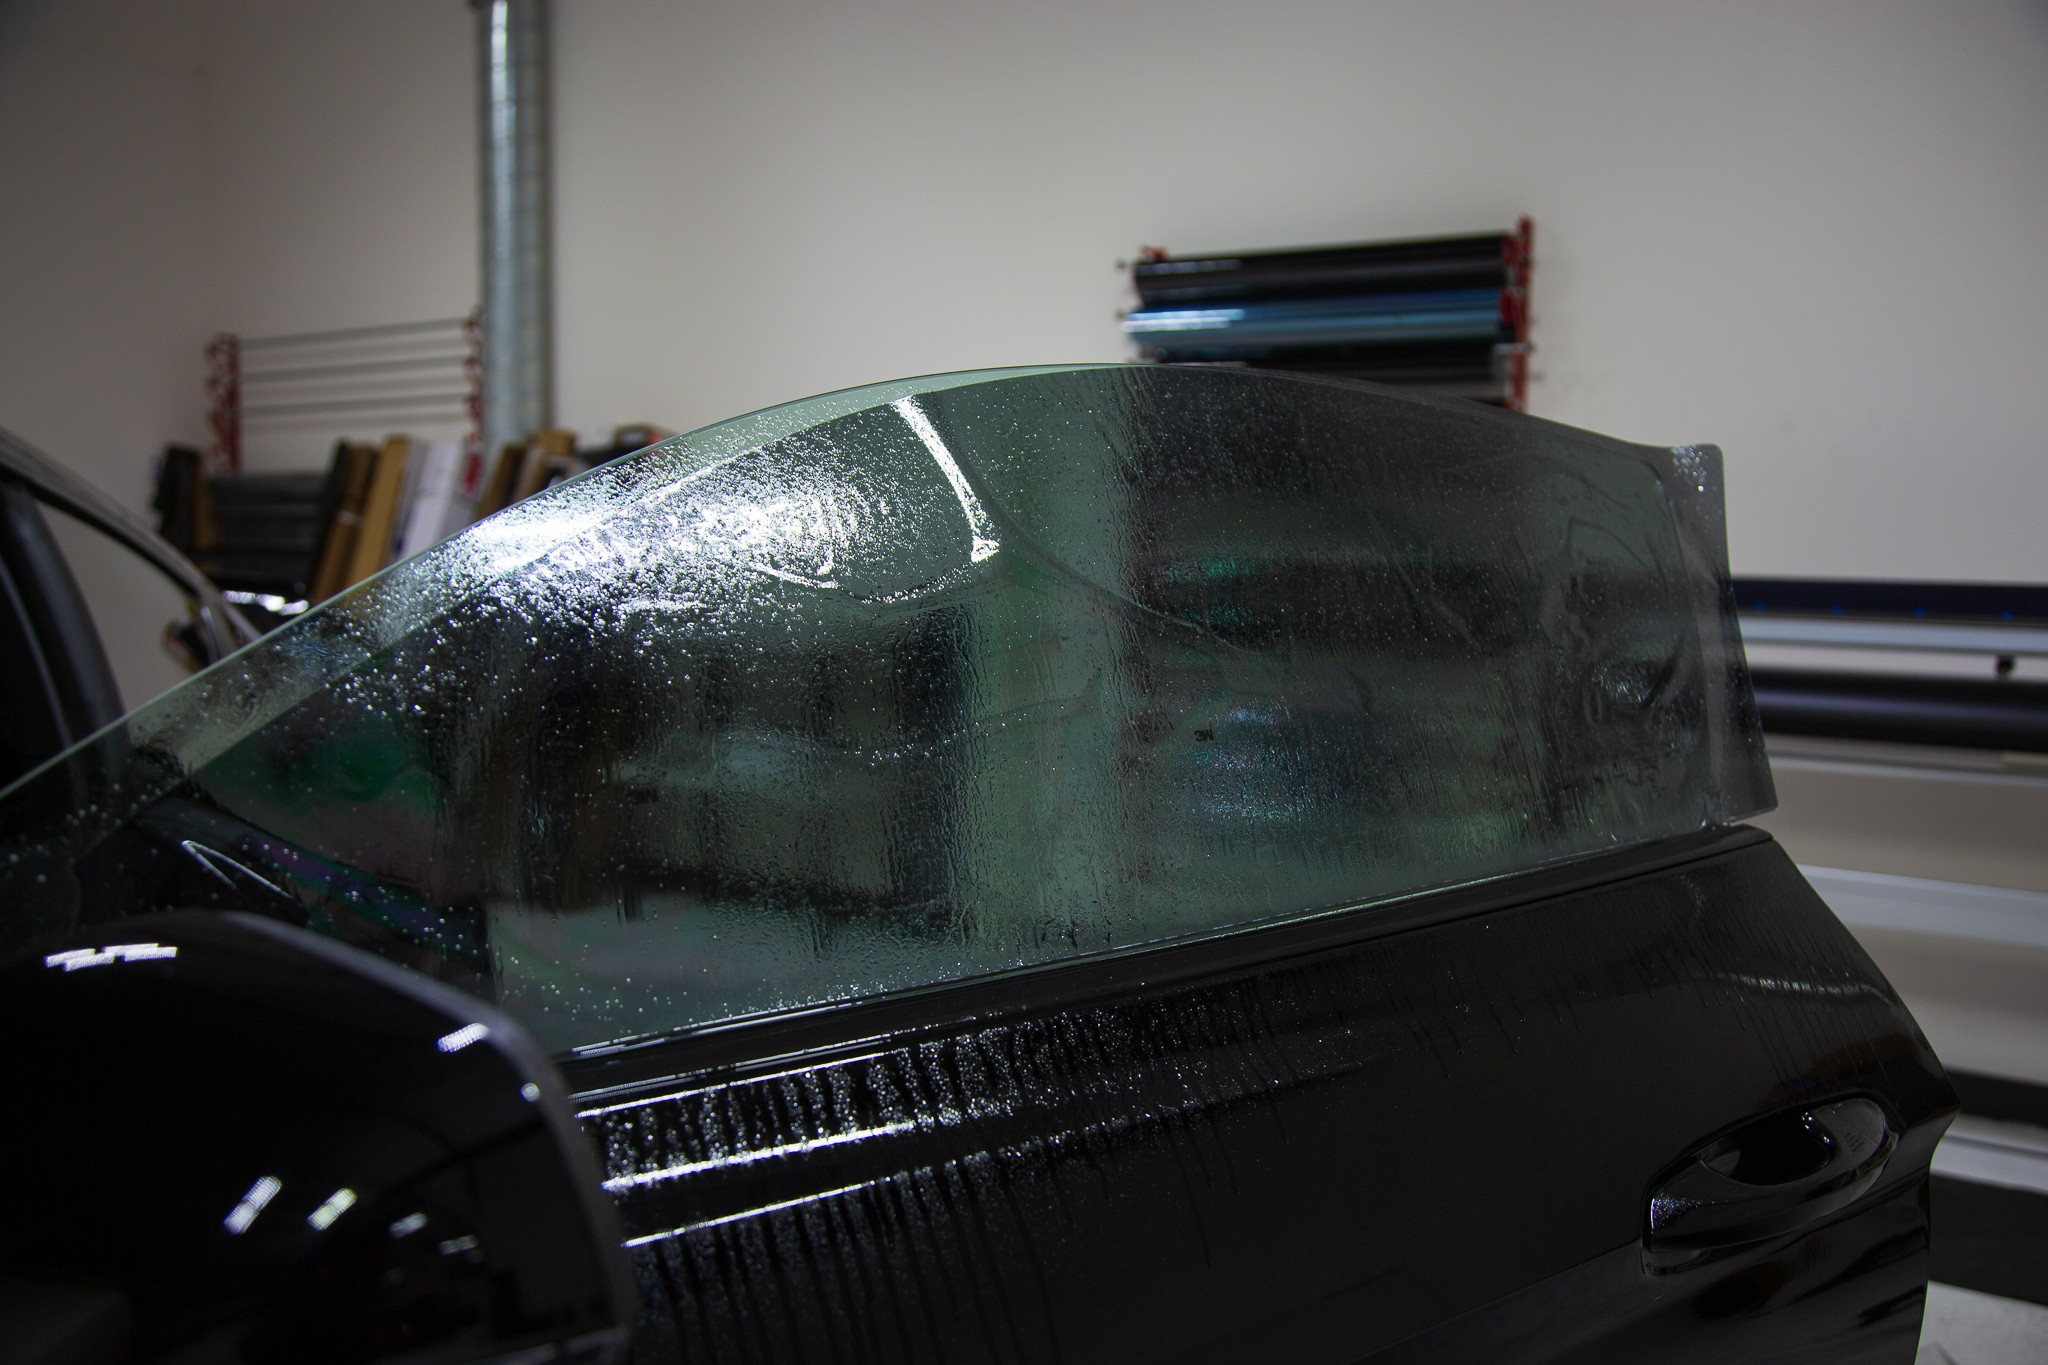 Mustang GT500 Gets Full Car PPF Wrap, Ceramic Coating & Window Tint - 3M Automotive Window Tint